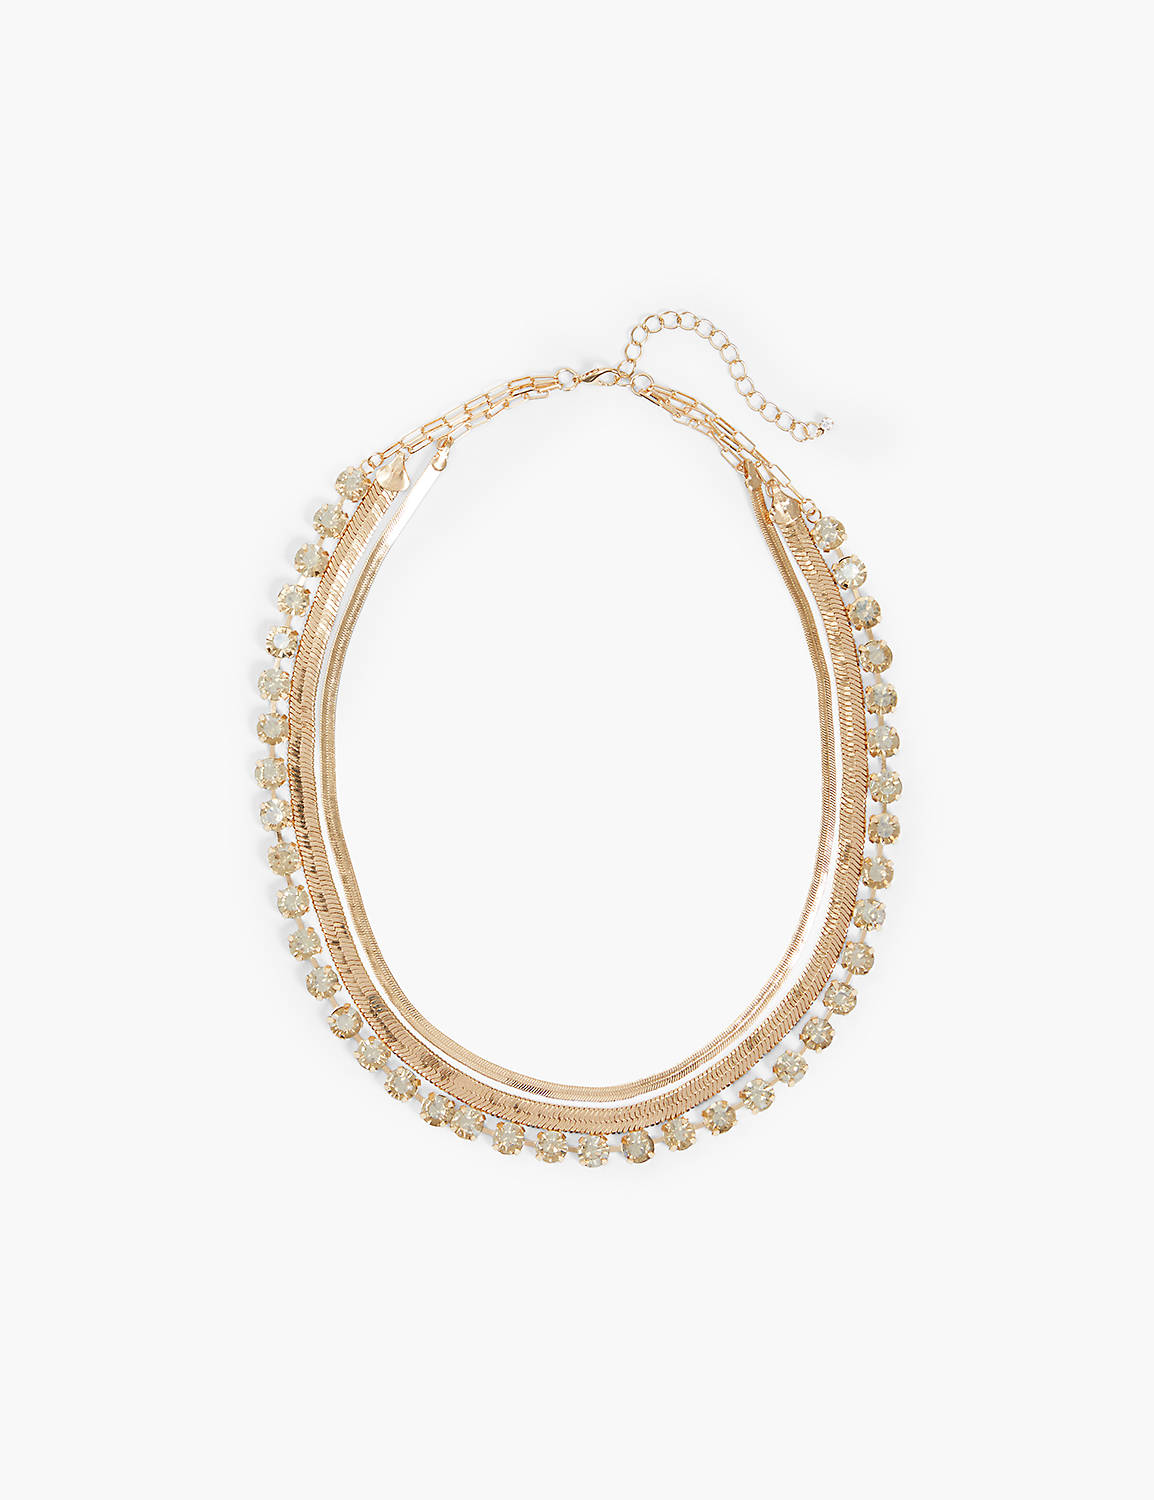 lane bryant goldtone & crystal multi-row snake chain necklace onesz gold tone